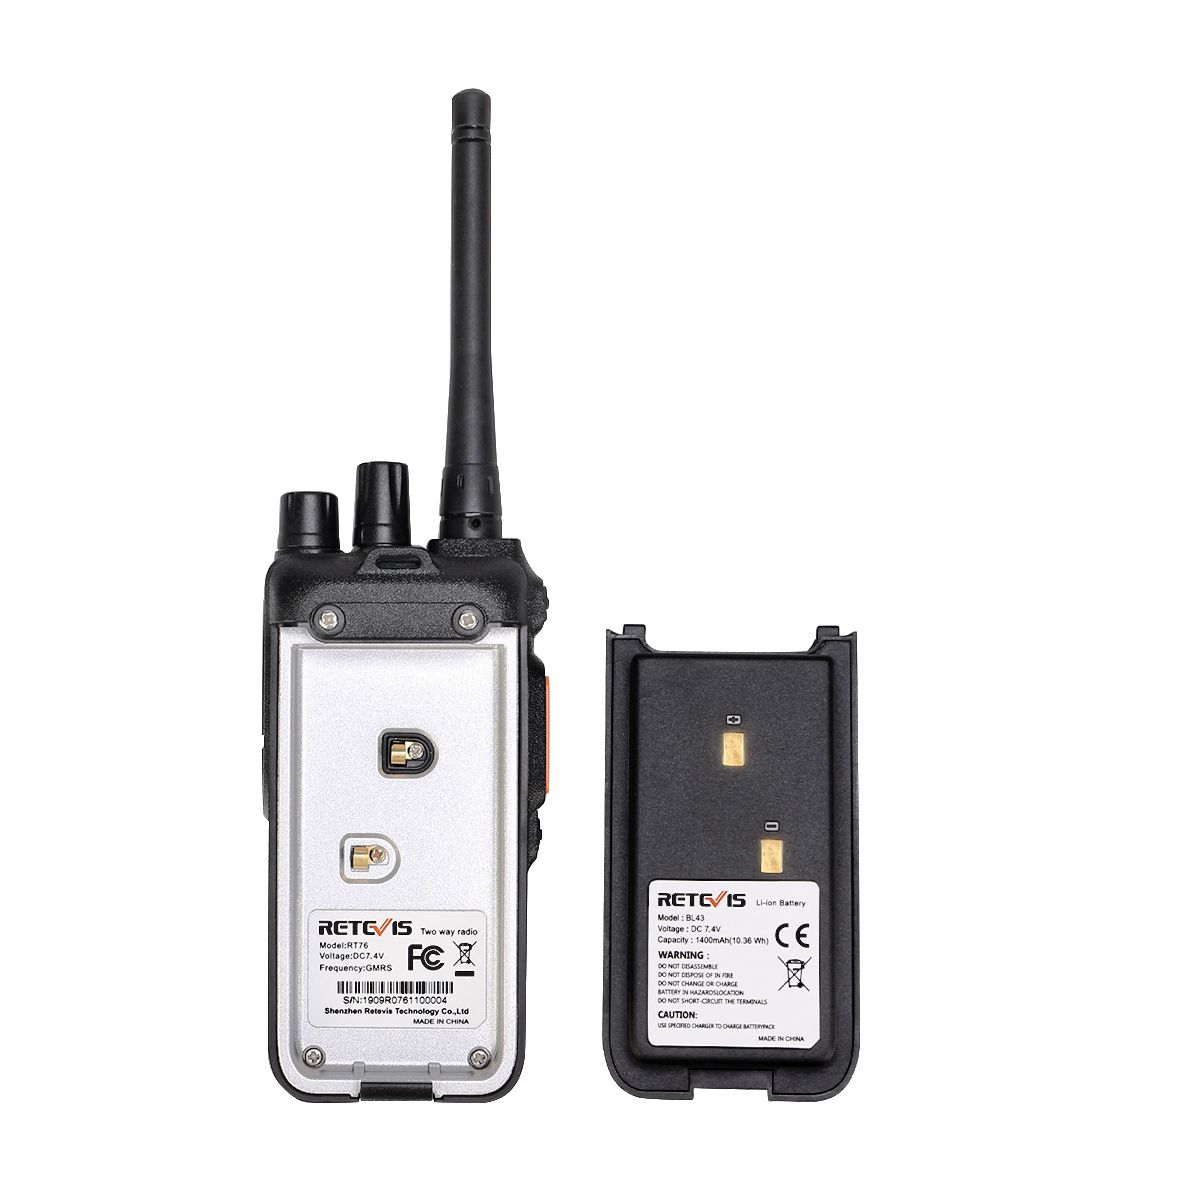 Retevis-RT76-Two-Way-Radio-Civil-Intercom-Console-5w-30-Channel-USB-Base-Walkie-Talkie-1649764